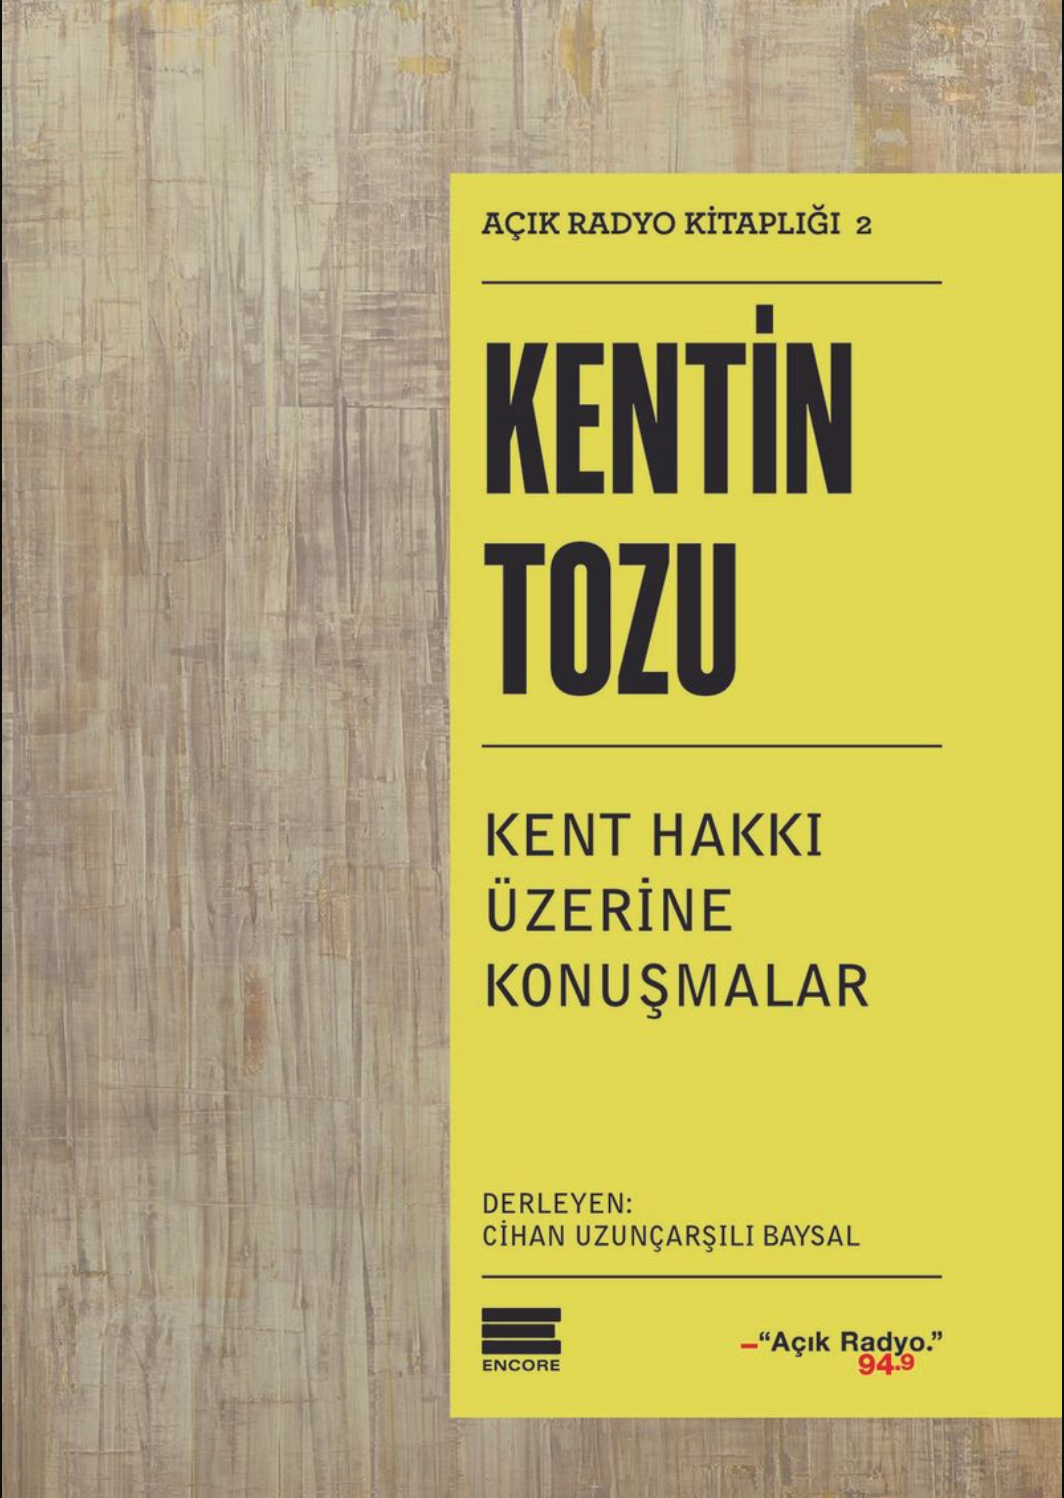 Kentin Tozu kitap kapağı